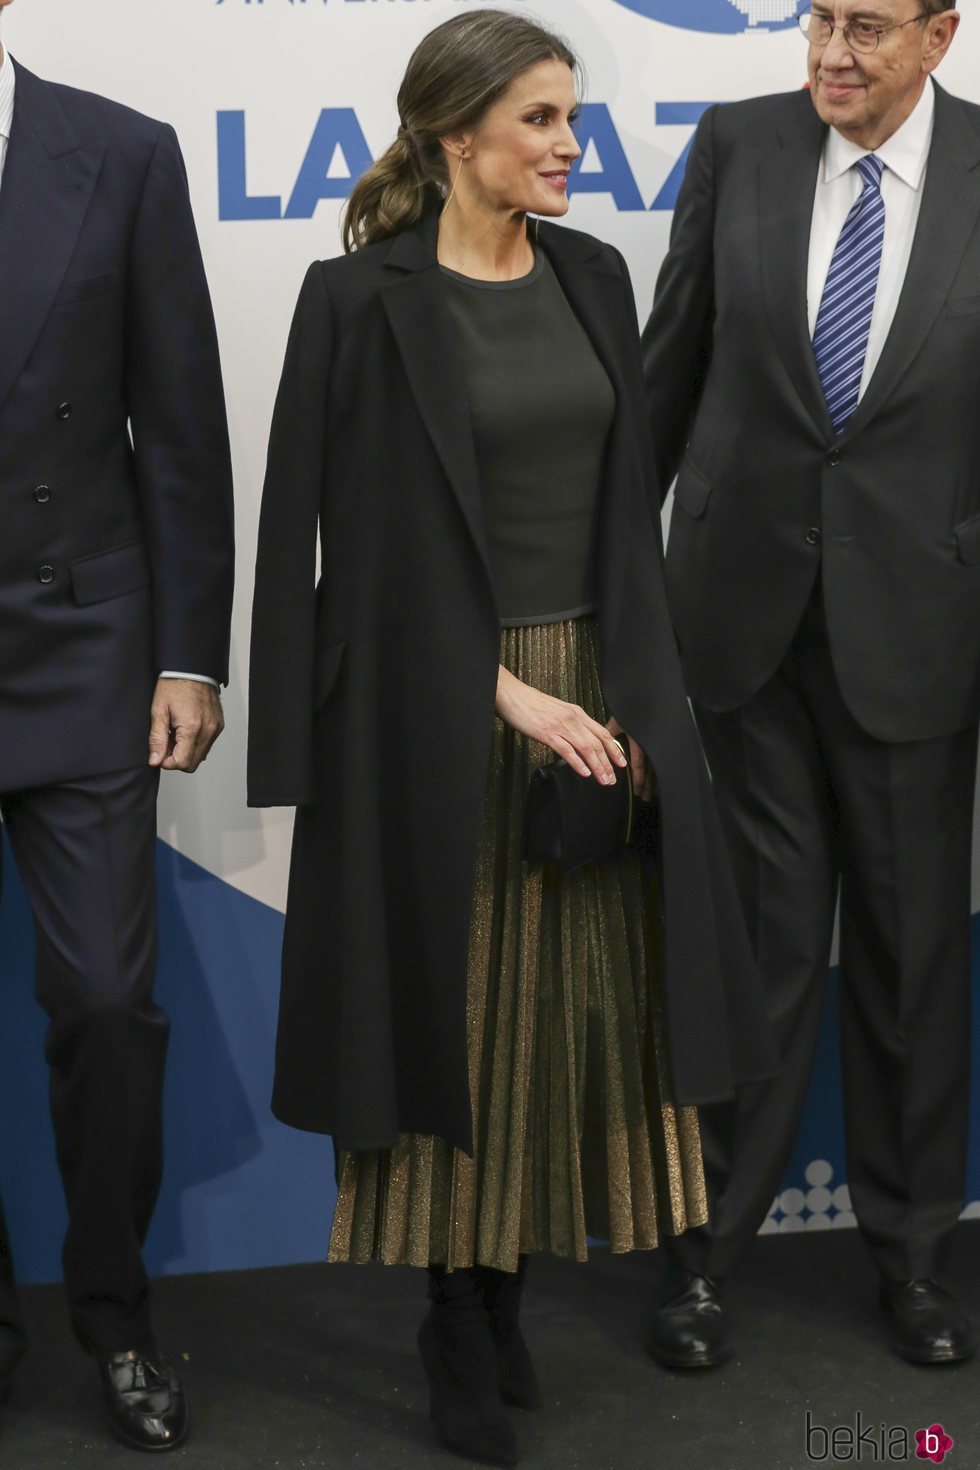 La Reina Letizia en el XX aniversario de La Razón